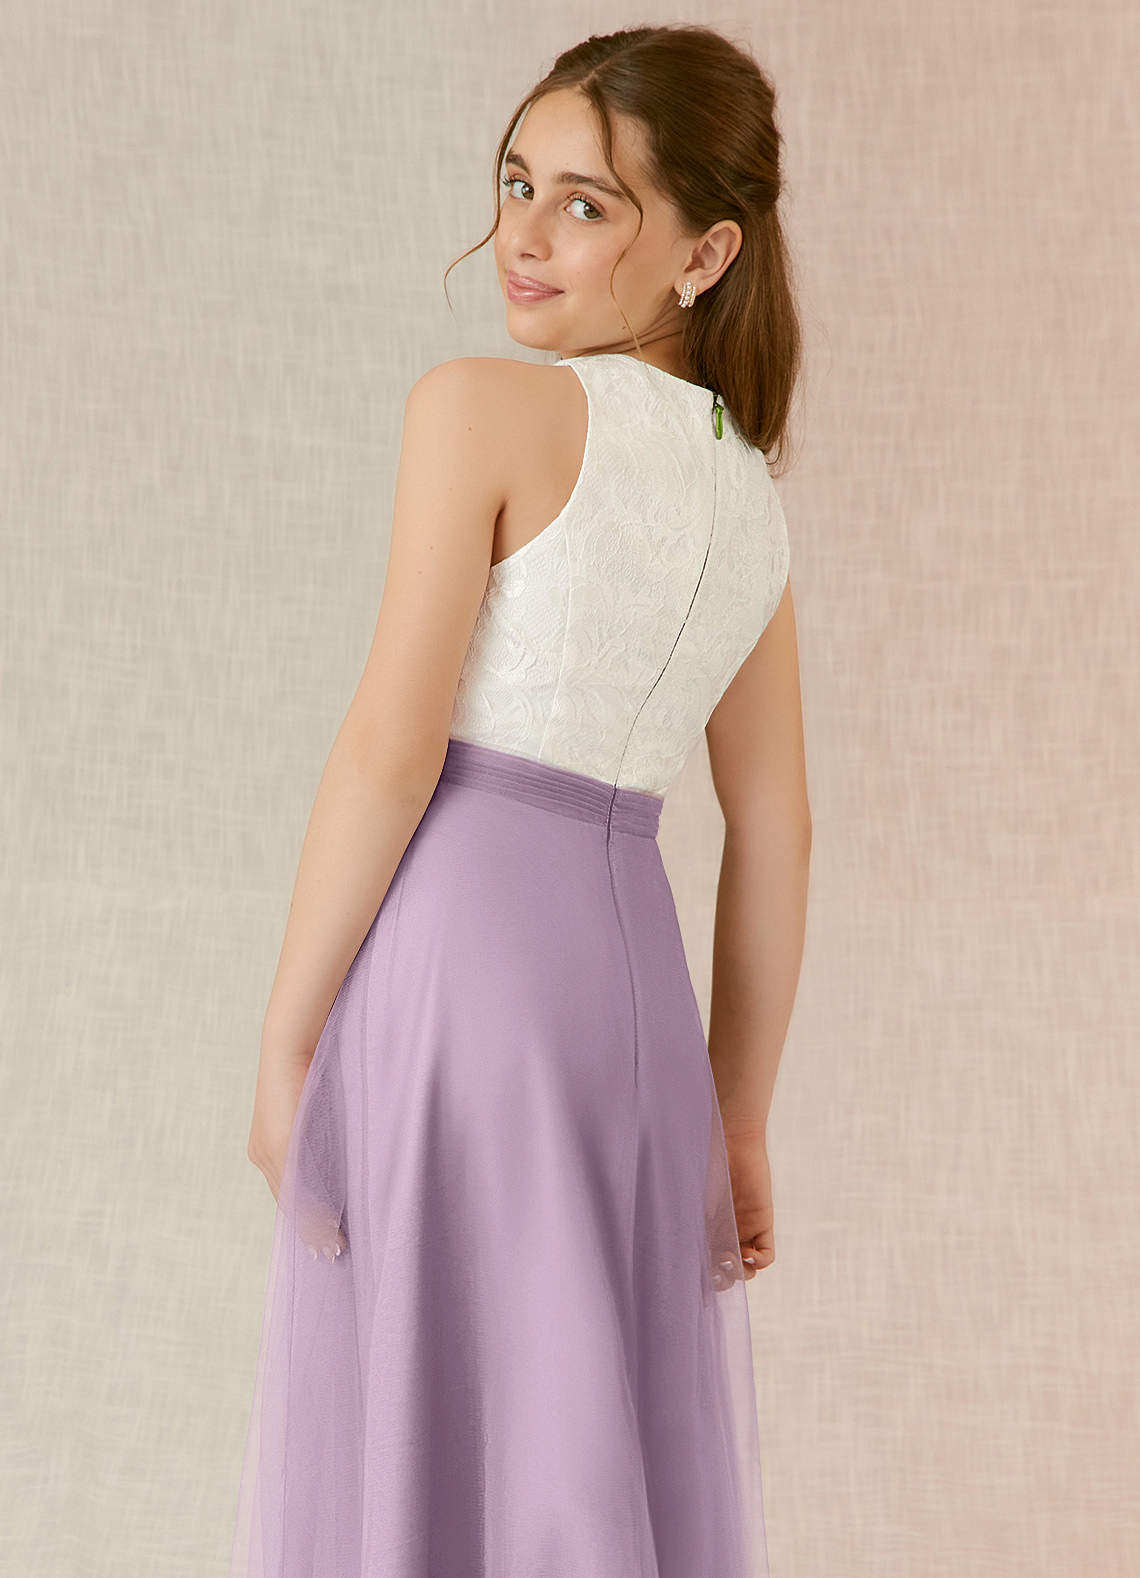 Azazie Albertine A-Line Lace Tulle Floor-Length Junior Bridesmaid Dress image1